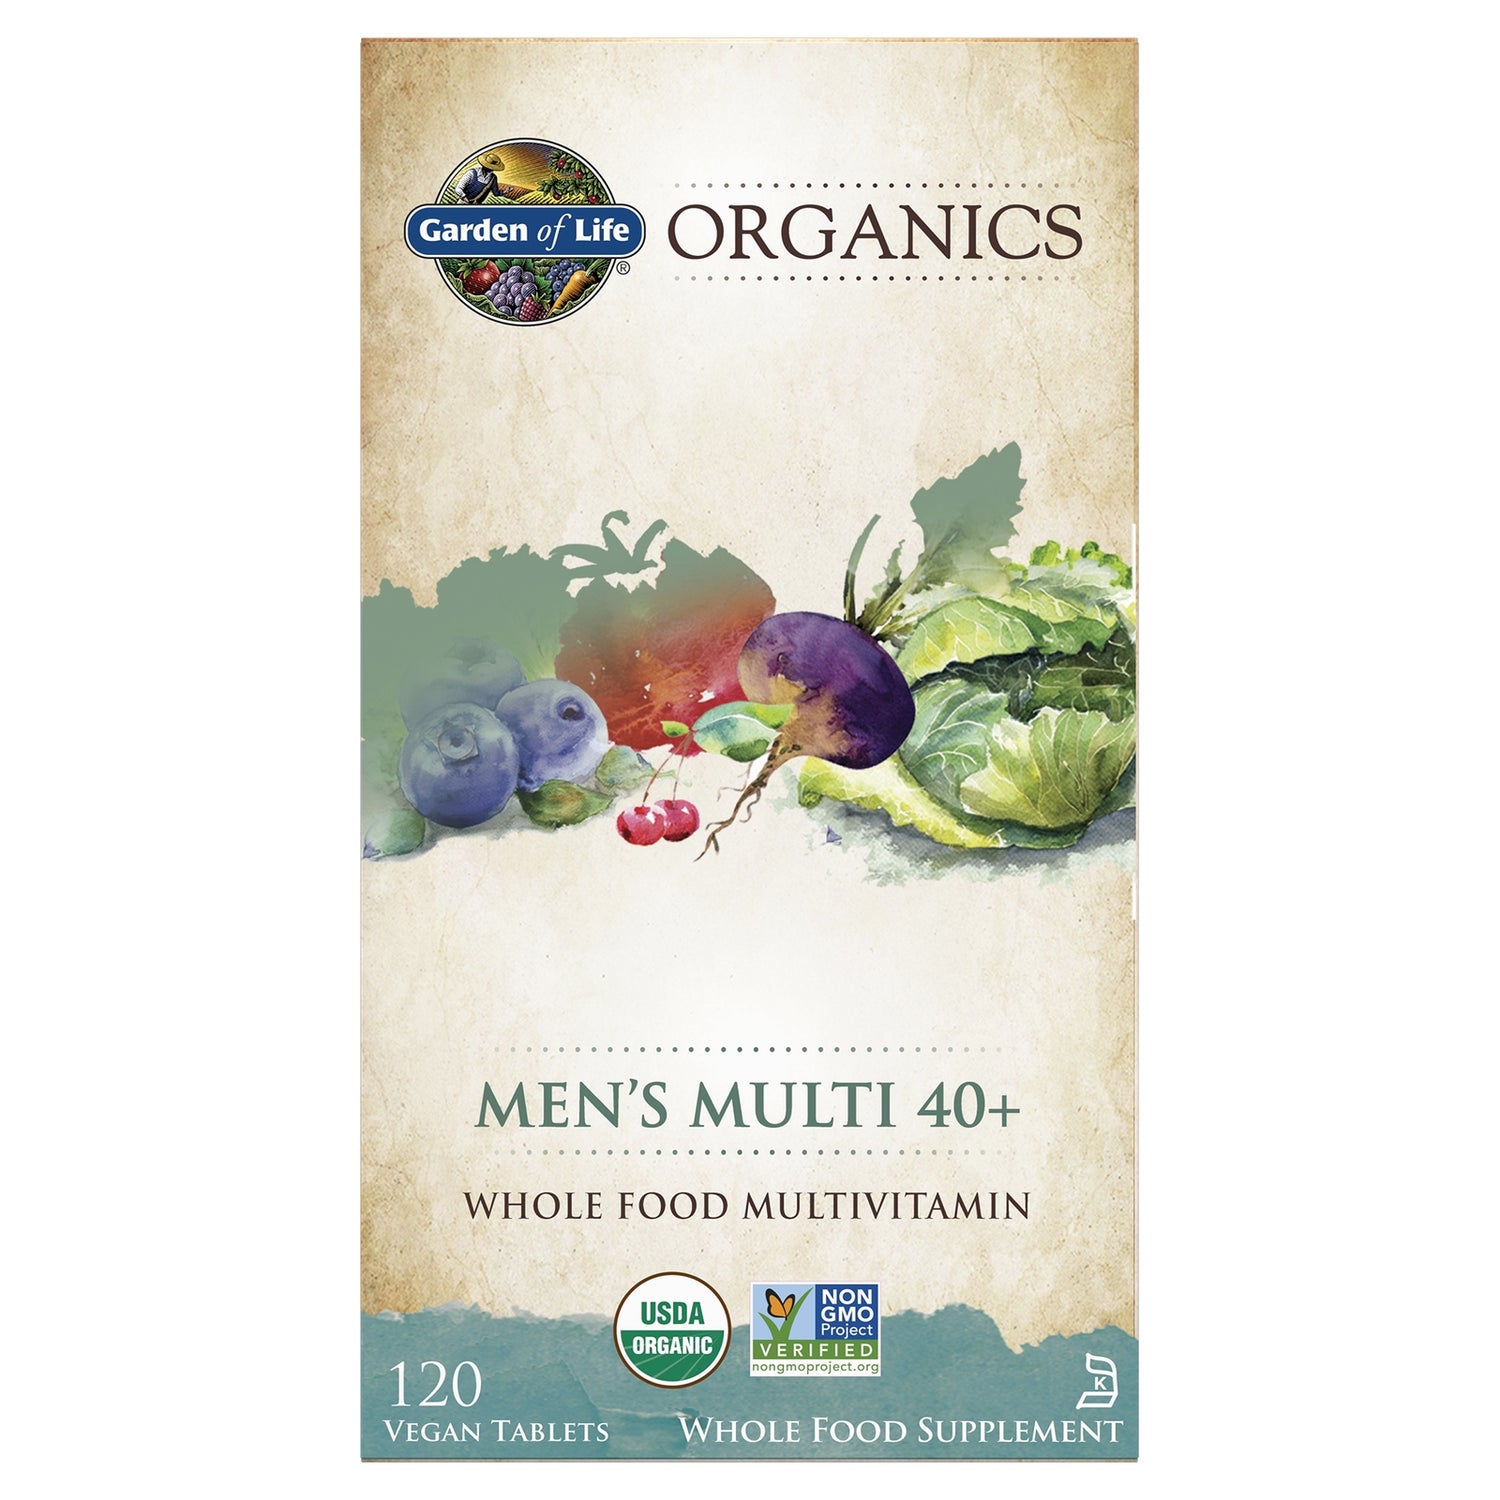 Organics Multivitaminen Mannen 40 - 120 tabletten